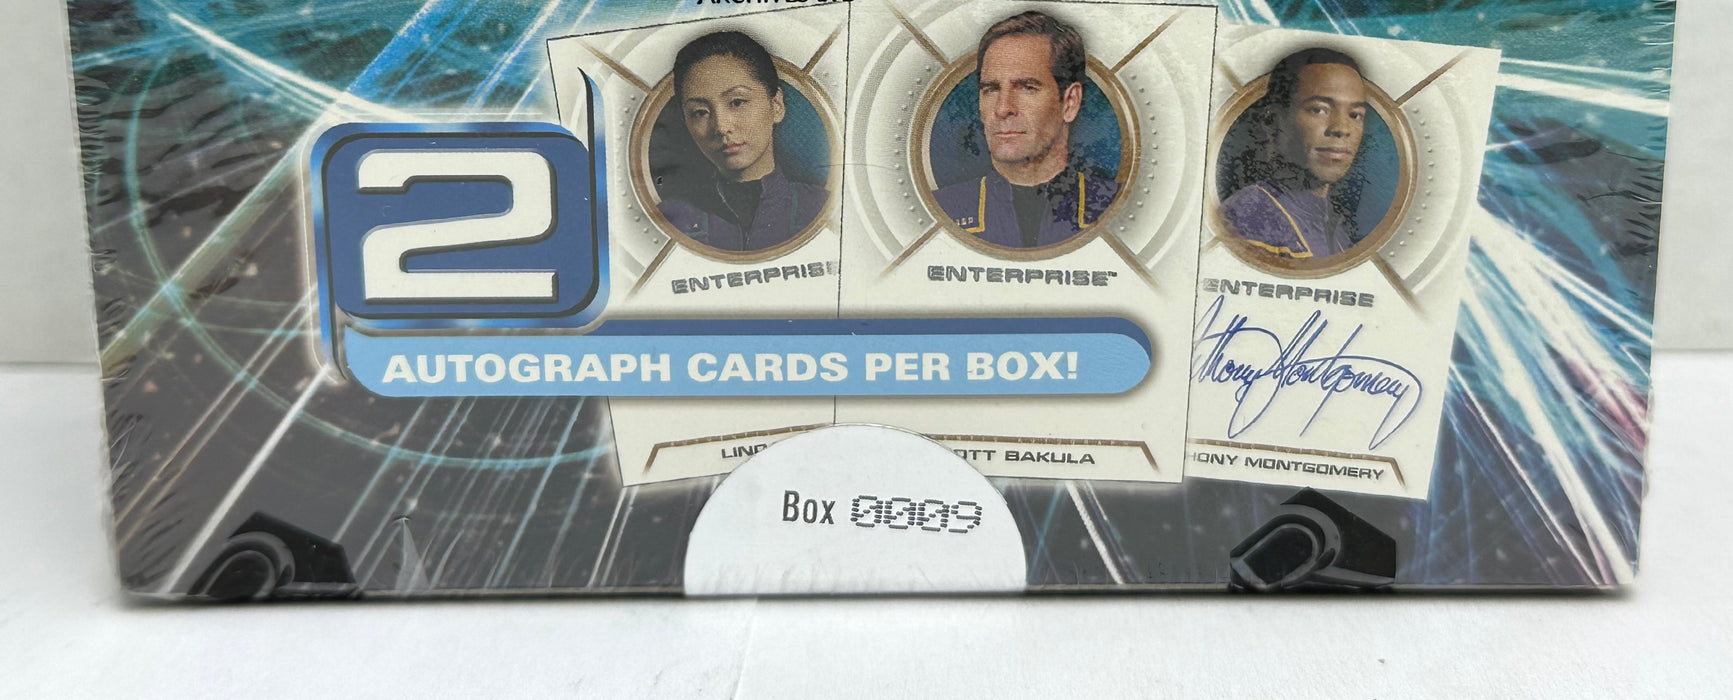 2003 Star Trek Enterprise Season Two 2 Trading Card Box Low Serial # 0009/8000   - TvMovieCards.com